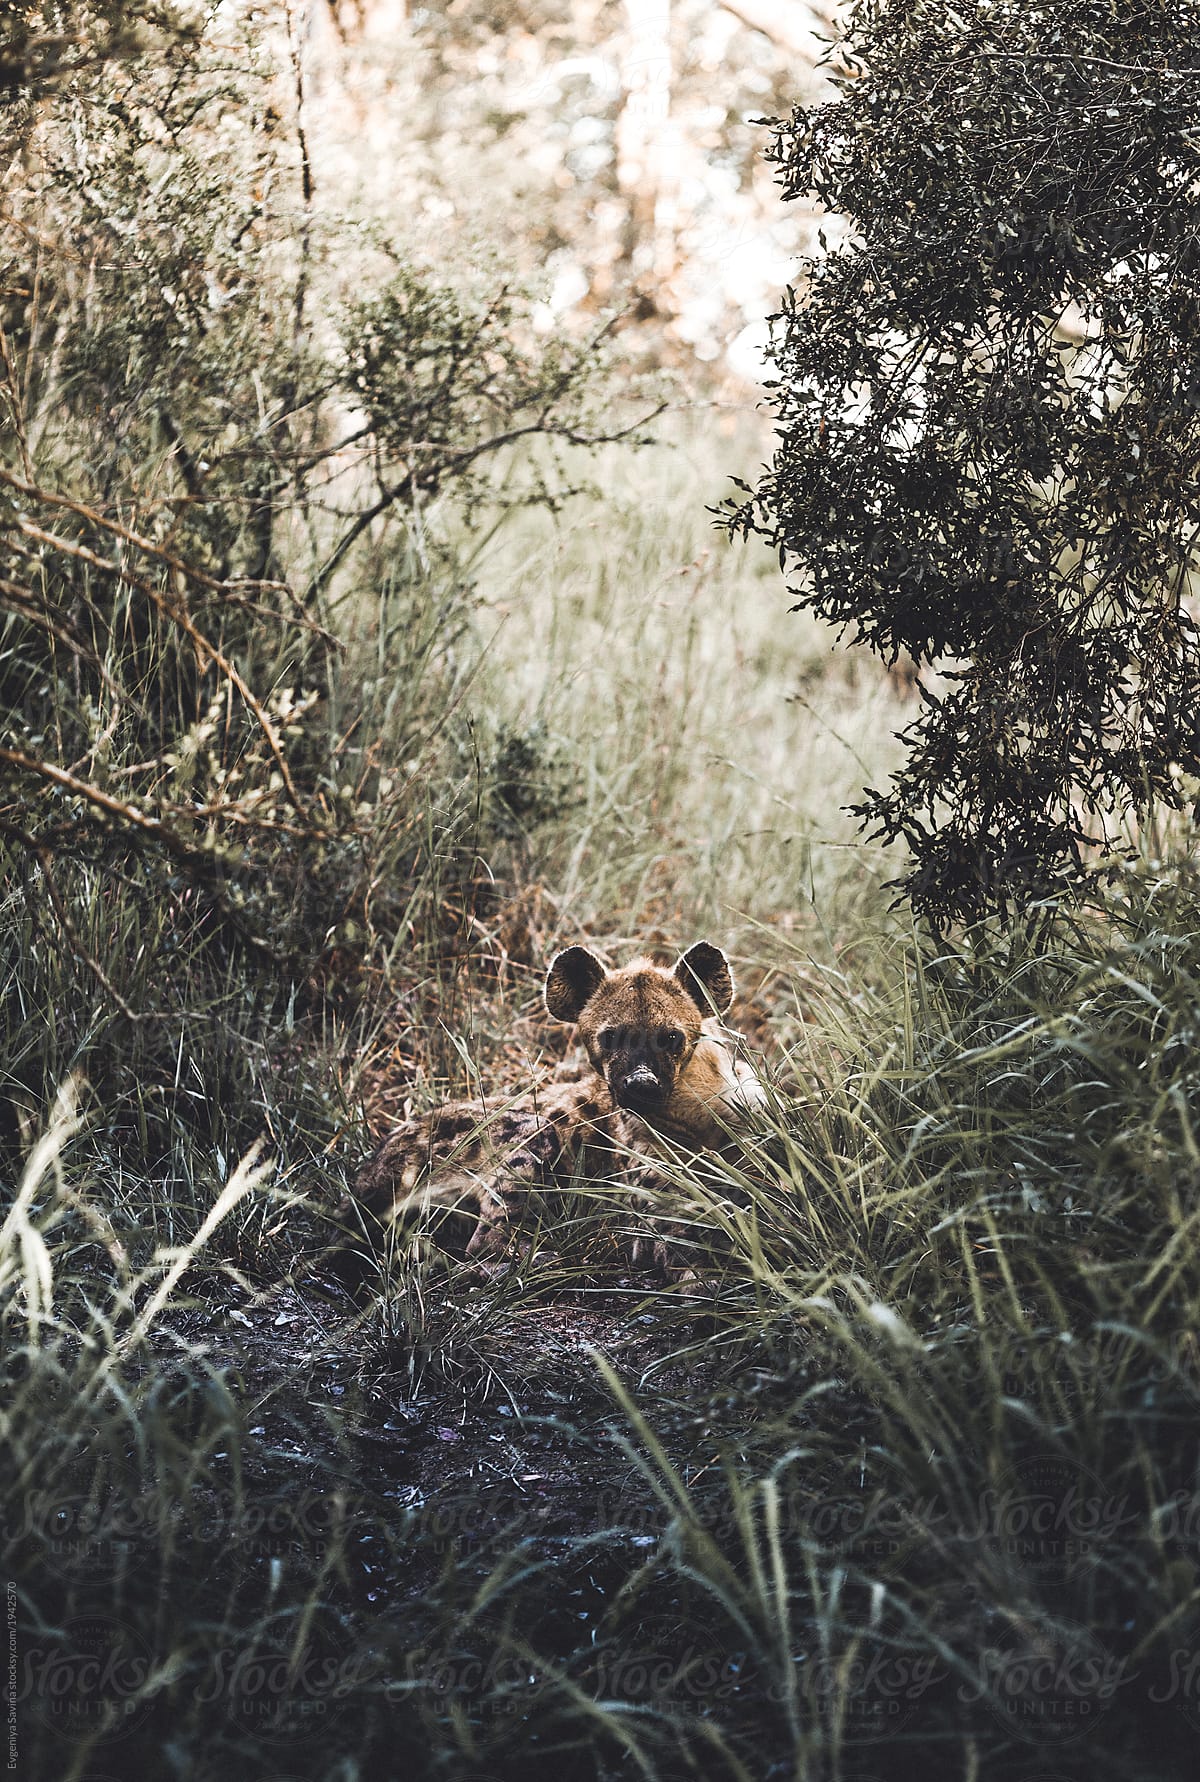 A Single Hyena Hiding In The Bush By Stocksy Contributor Evgeniya